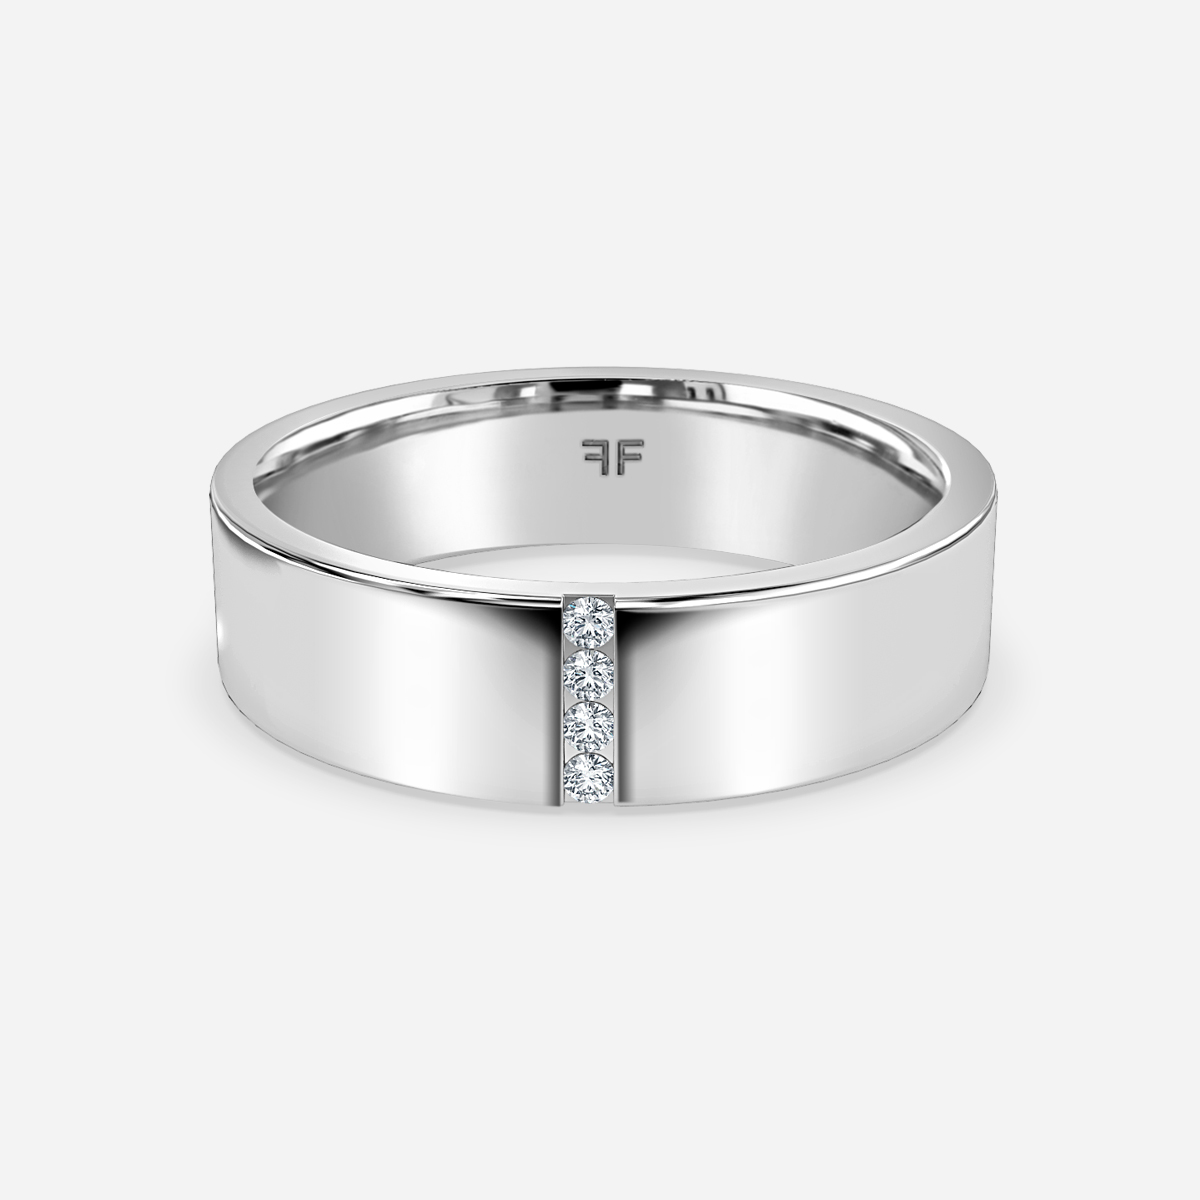 Men's diamond set wedding rings